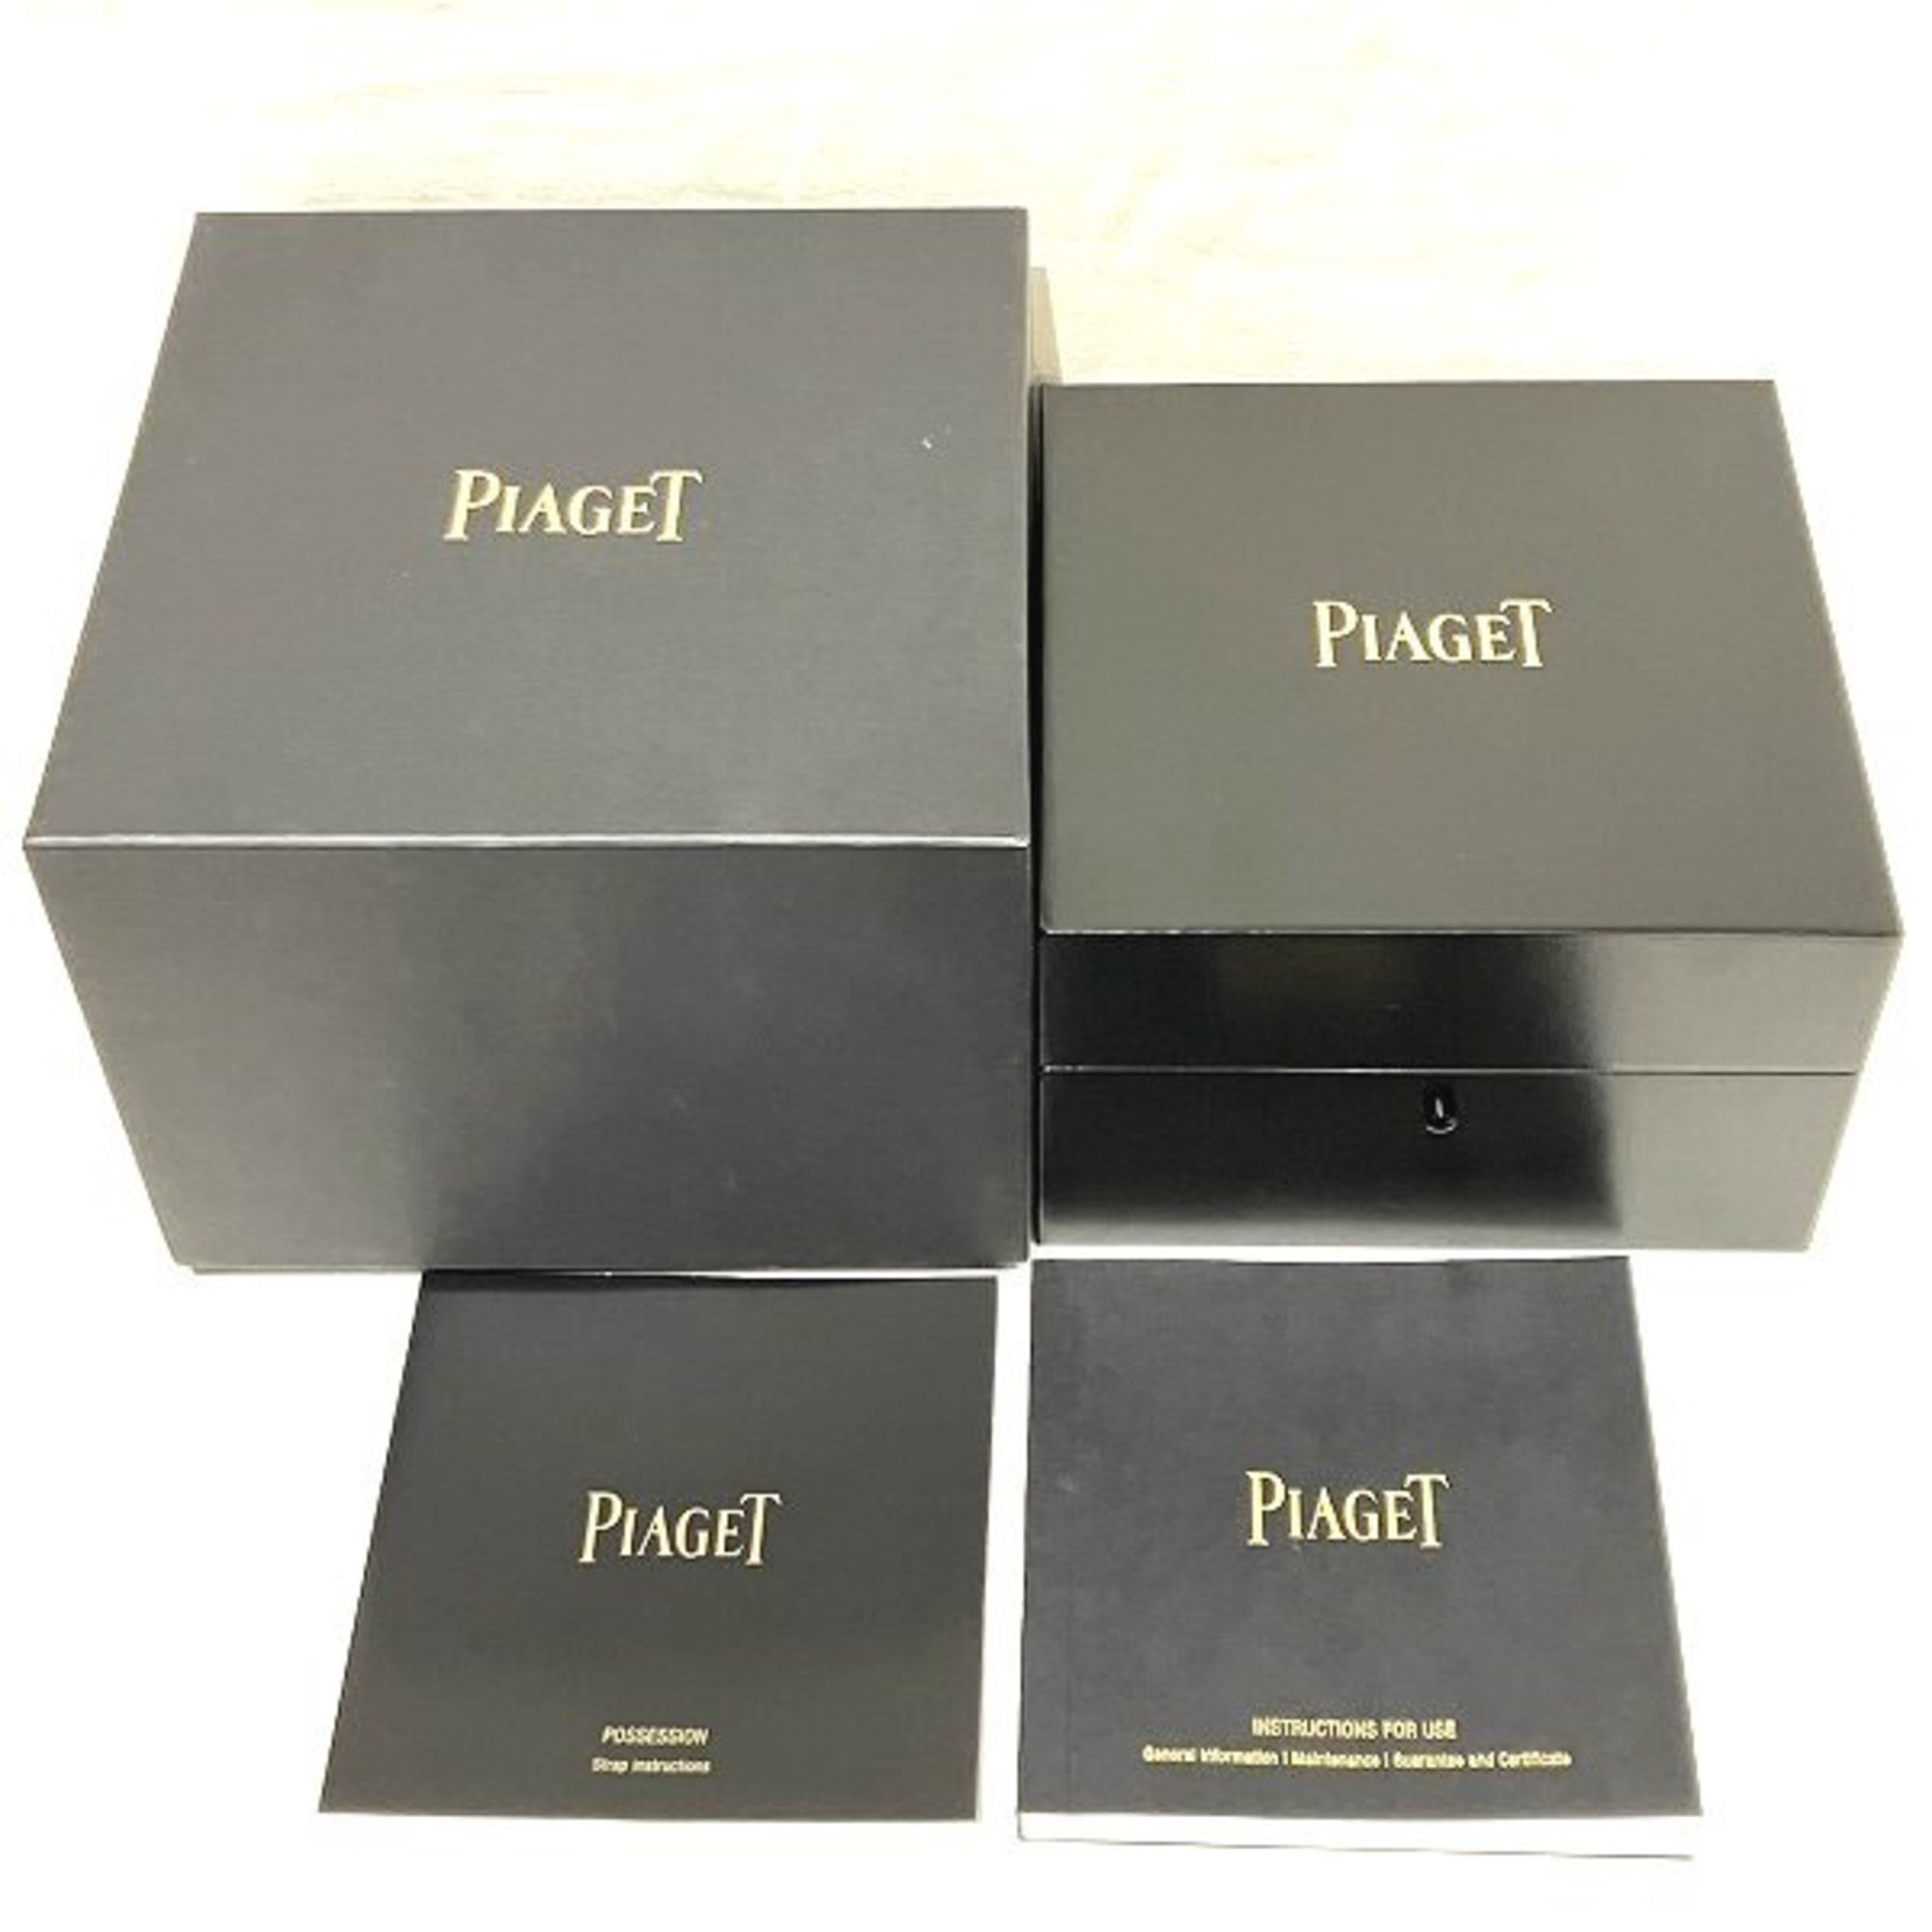 Piaget Polo 27700 Automatic K18WG Watch Men's